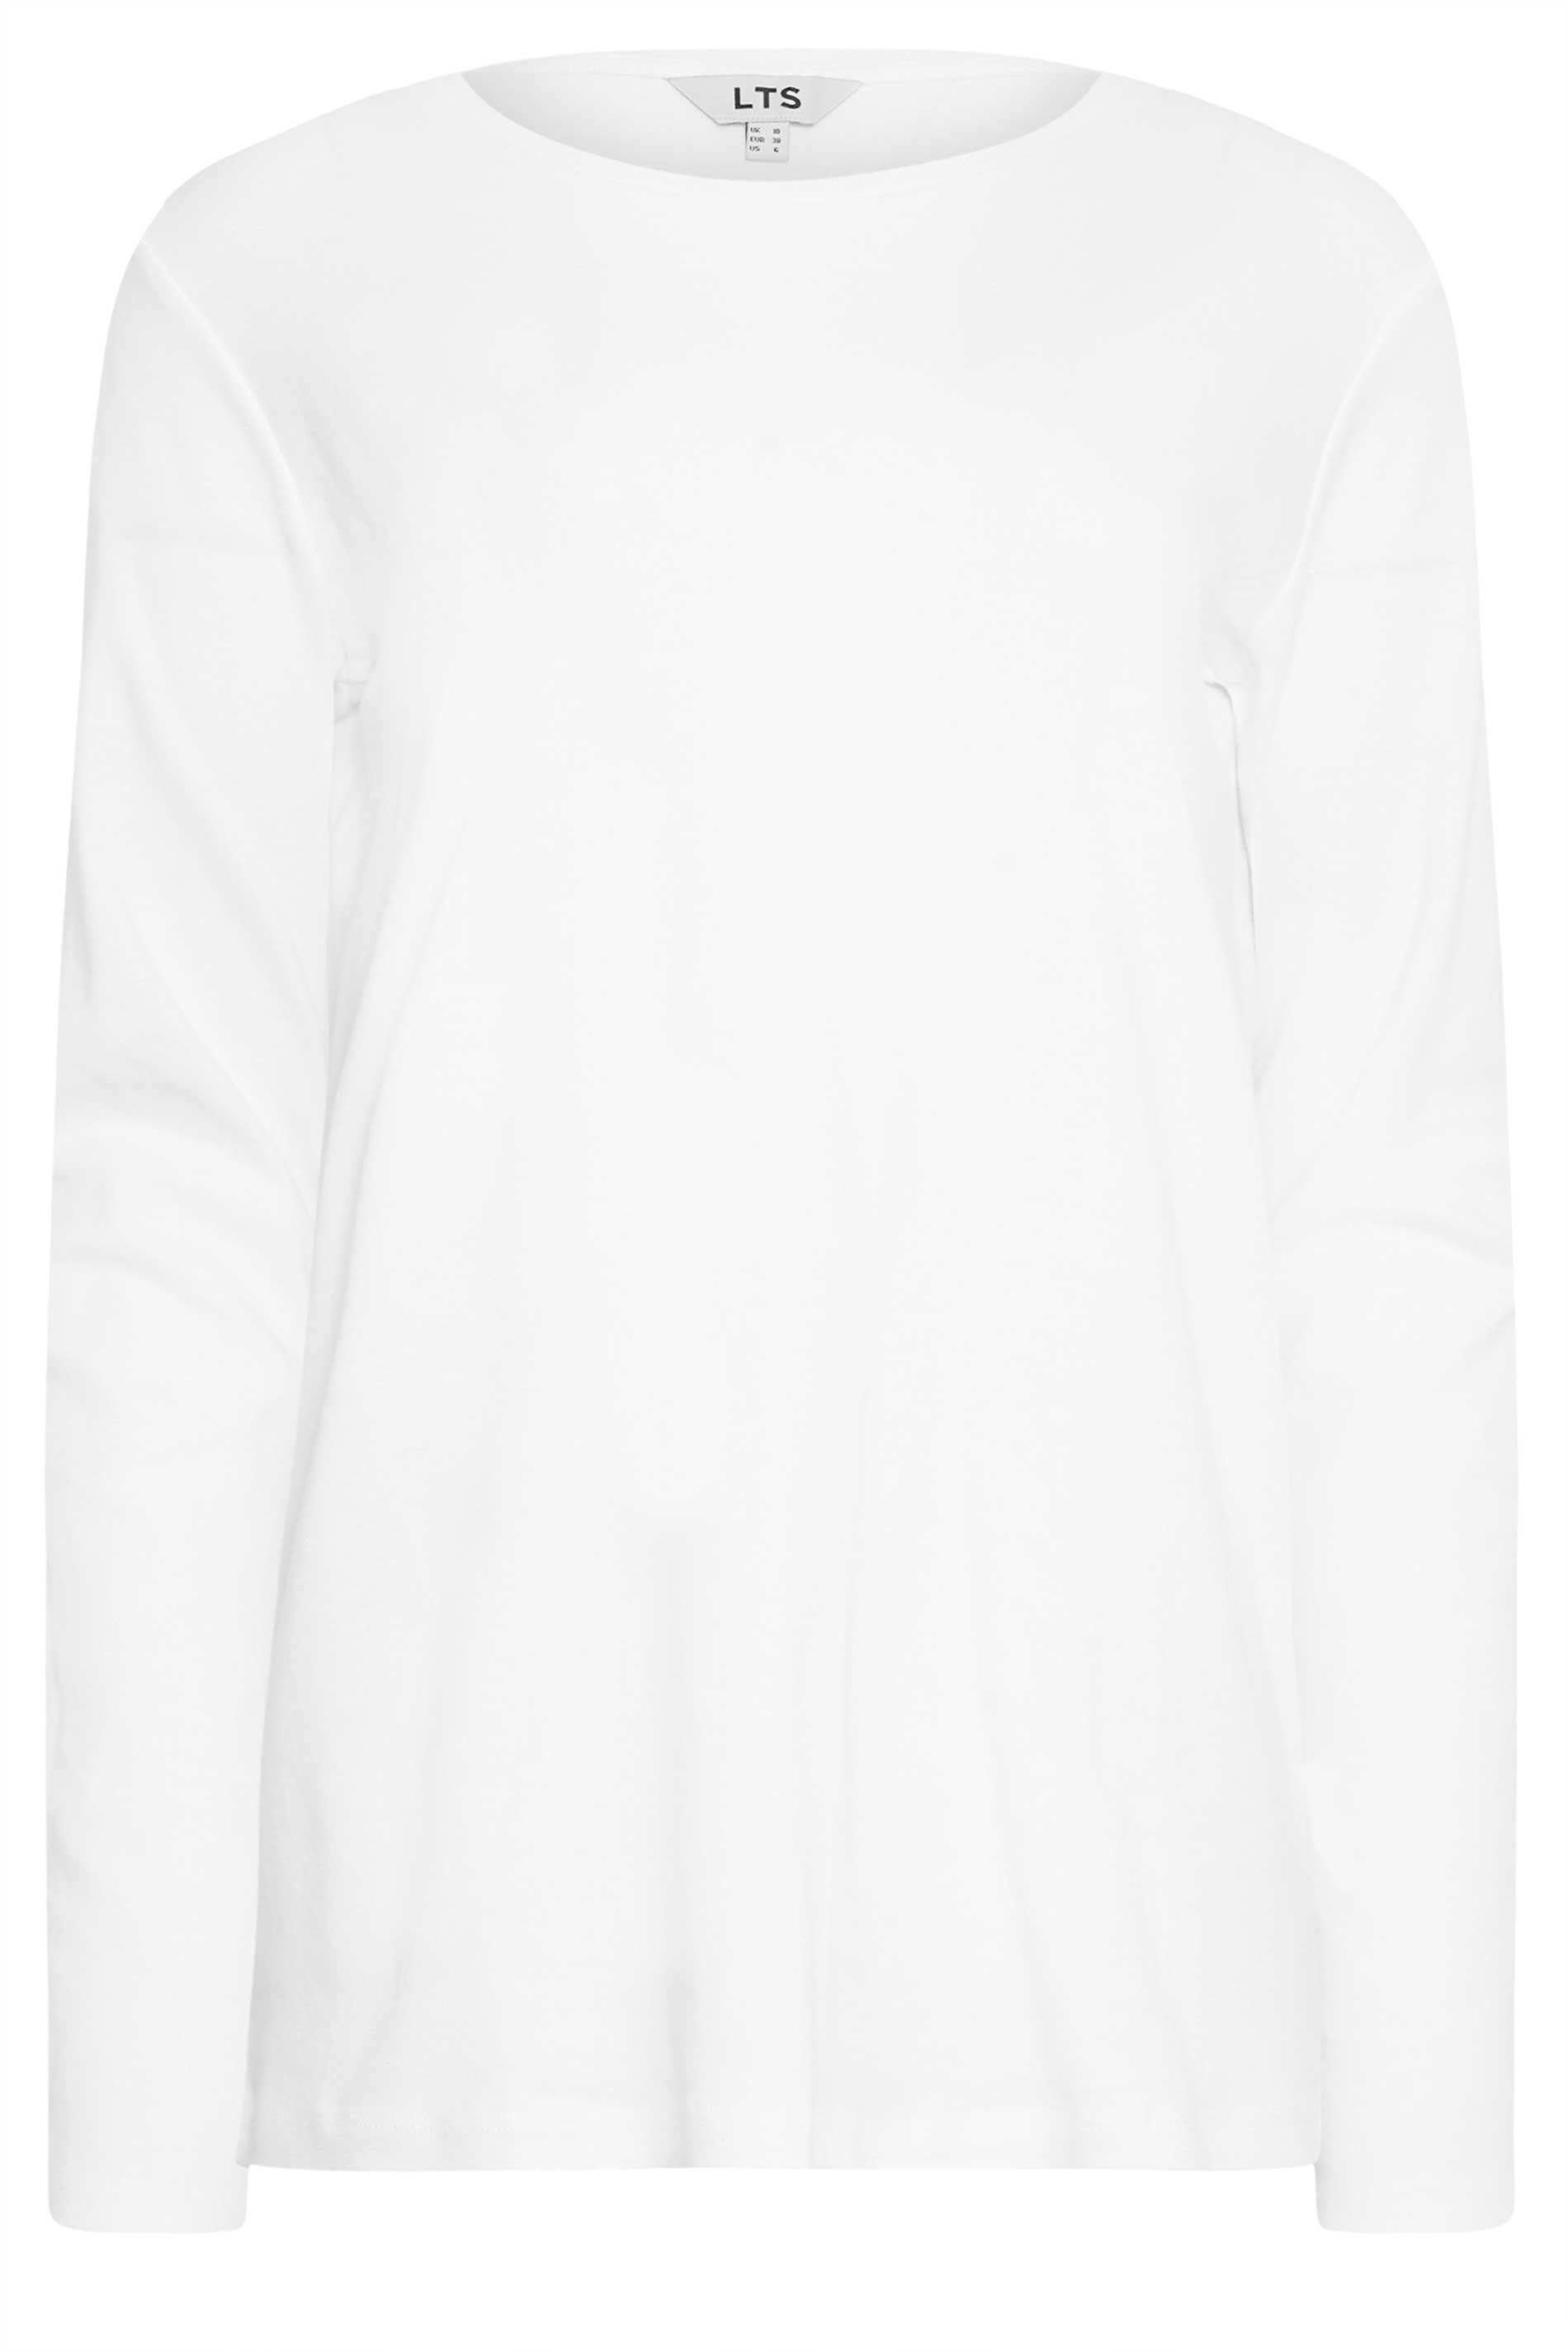 LTS Tall Women's 2 Pack Black & White Lace T-Shirt Bras